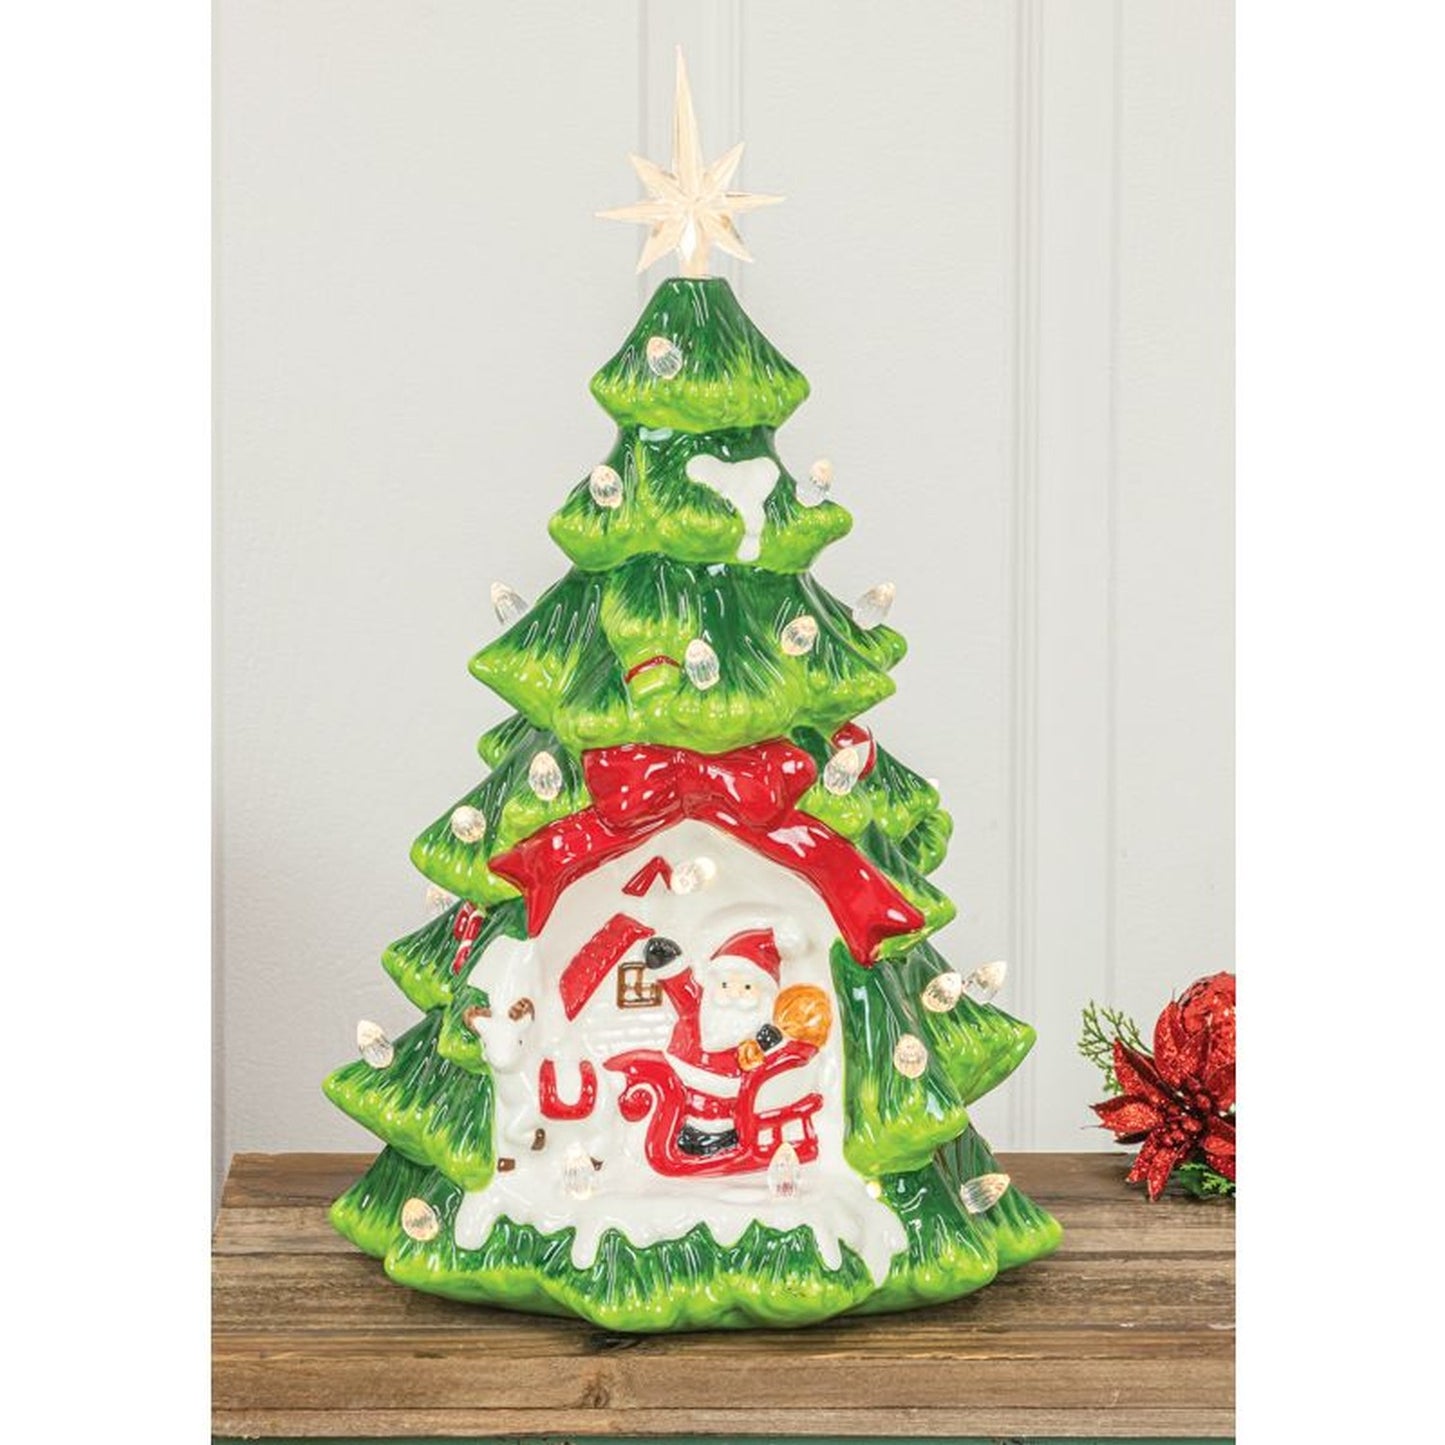 Hanna's Handiworks Ceramic Santa Christmas Tree